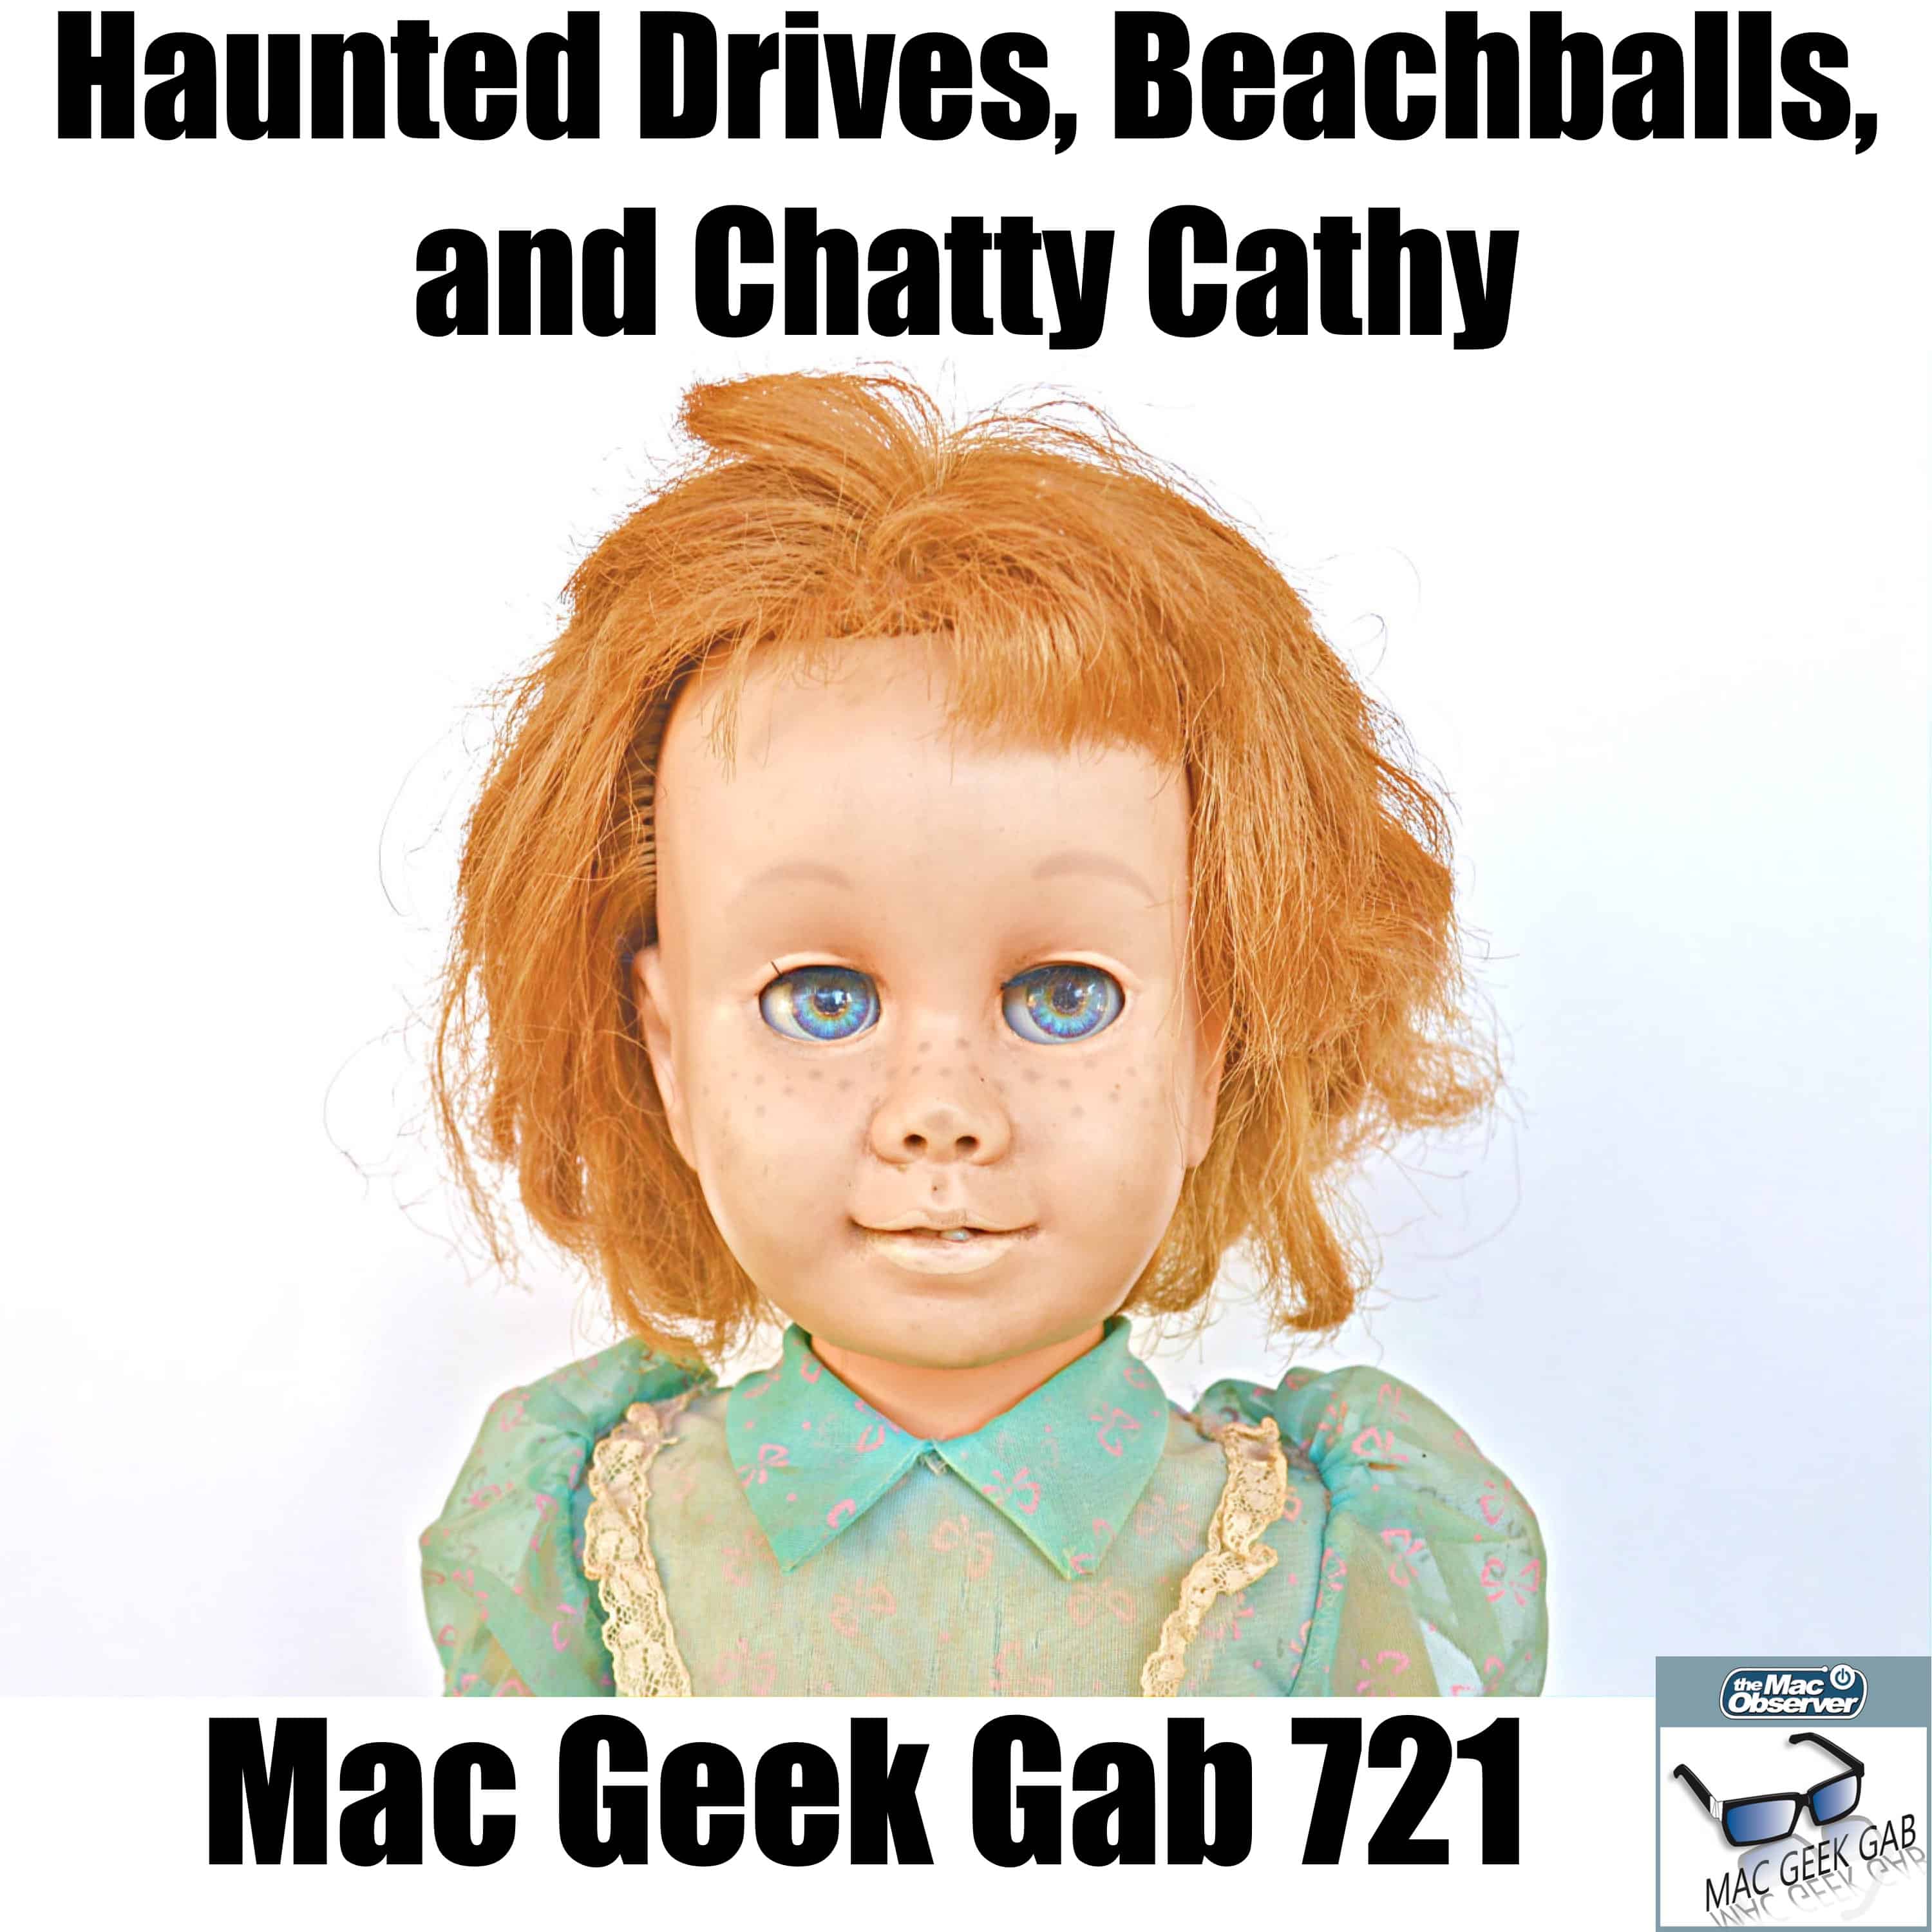 Haunted Drives, Beachballs, and Chatty Cathy – Mac Geek Gab 721